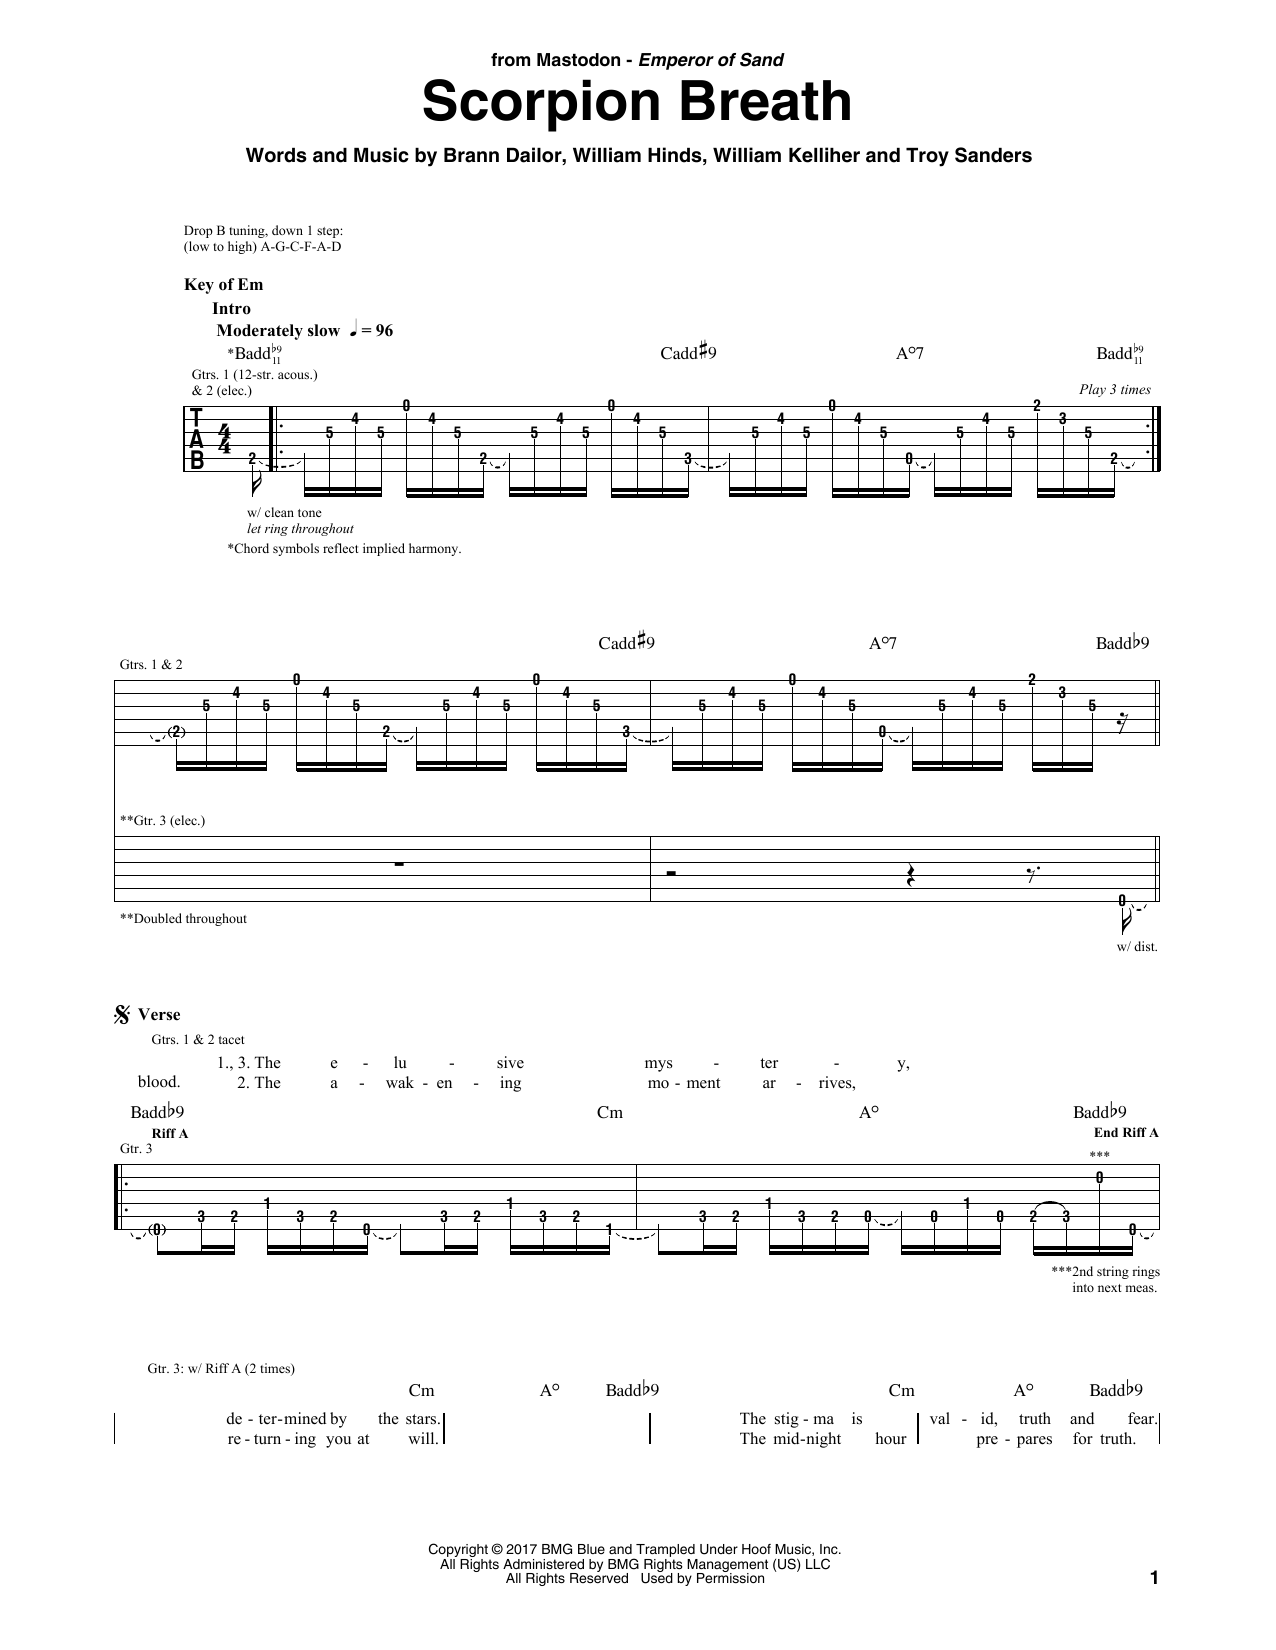 Mastodon Scorpion Breath Sheet Music Notes & Chords for Guitar Tab - Download or Print PDF